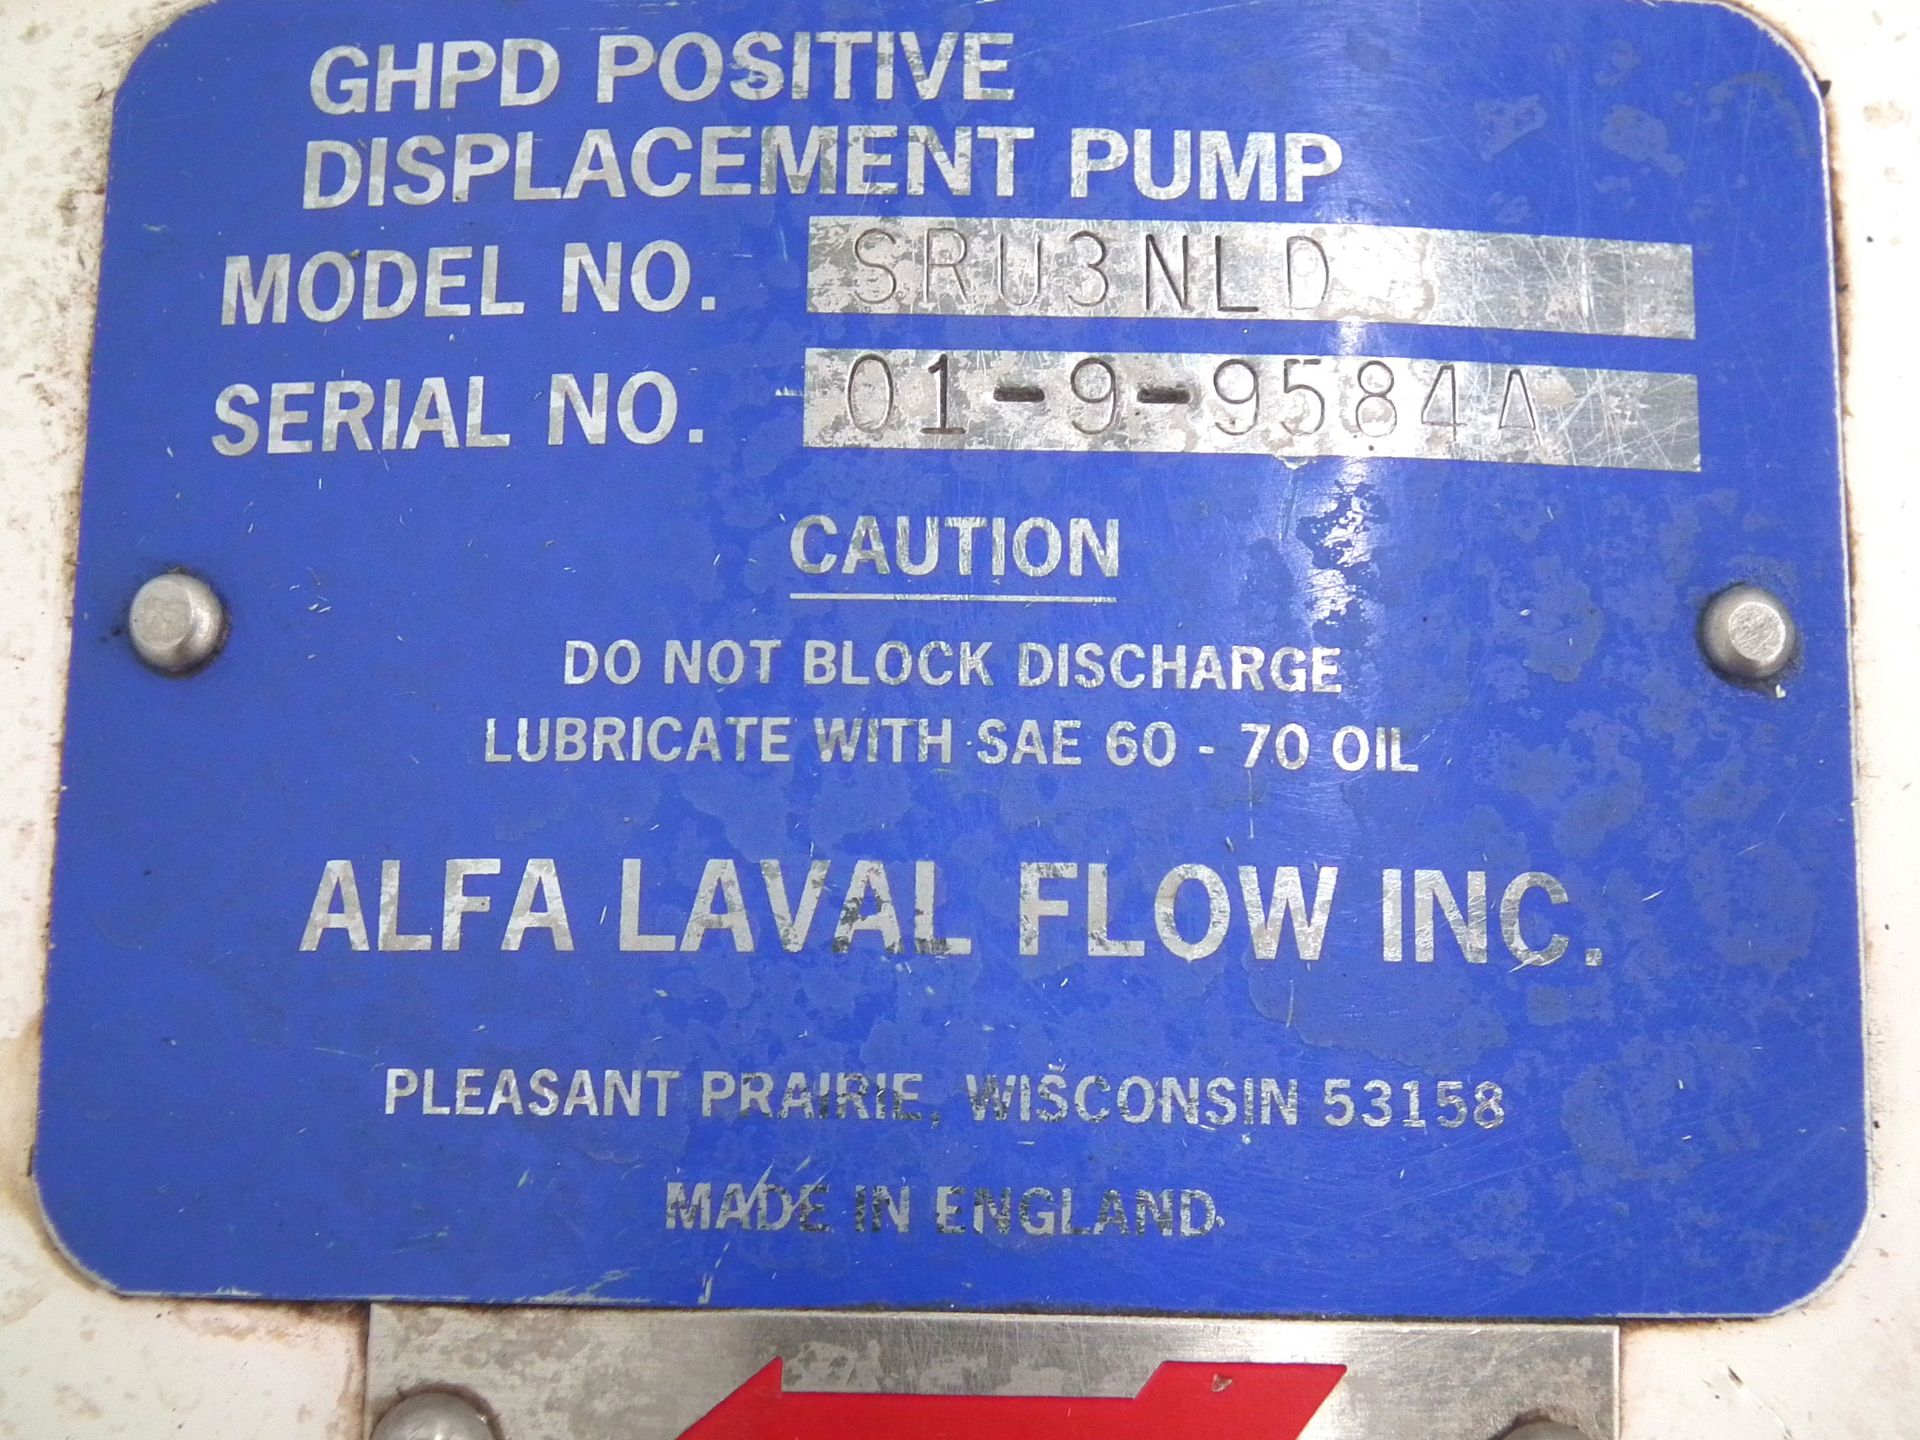 Waukesha SRU3NLD Positive Displacement Pump GHPD (Rigging Fee - $95) - Image 6 of 8